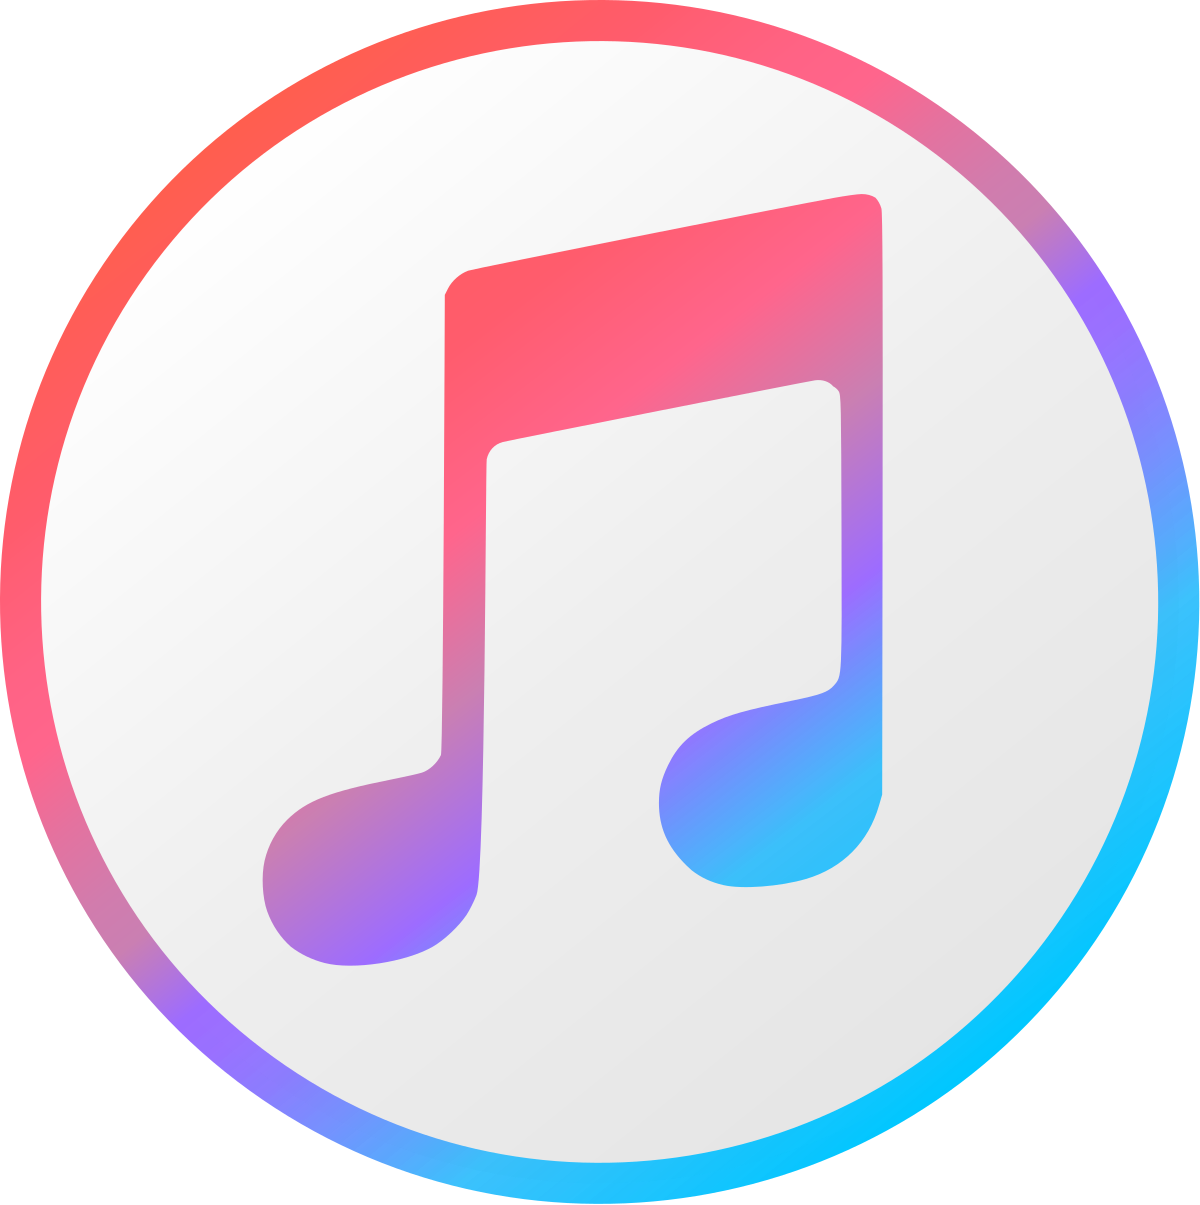 iTunes logo and Windows update logo